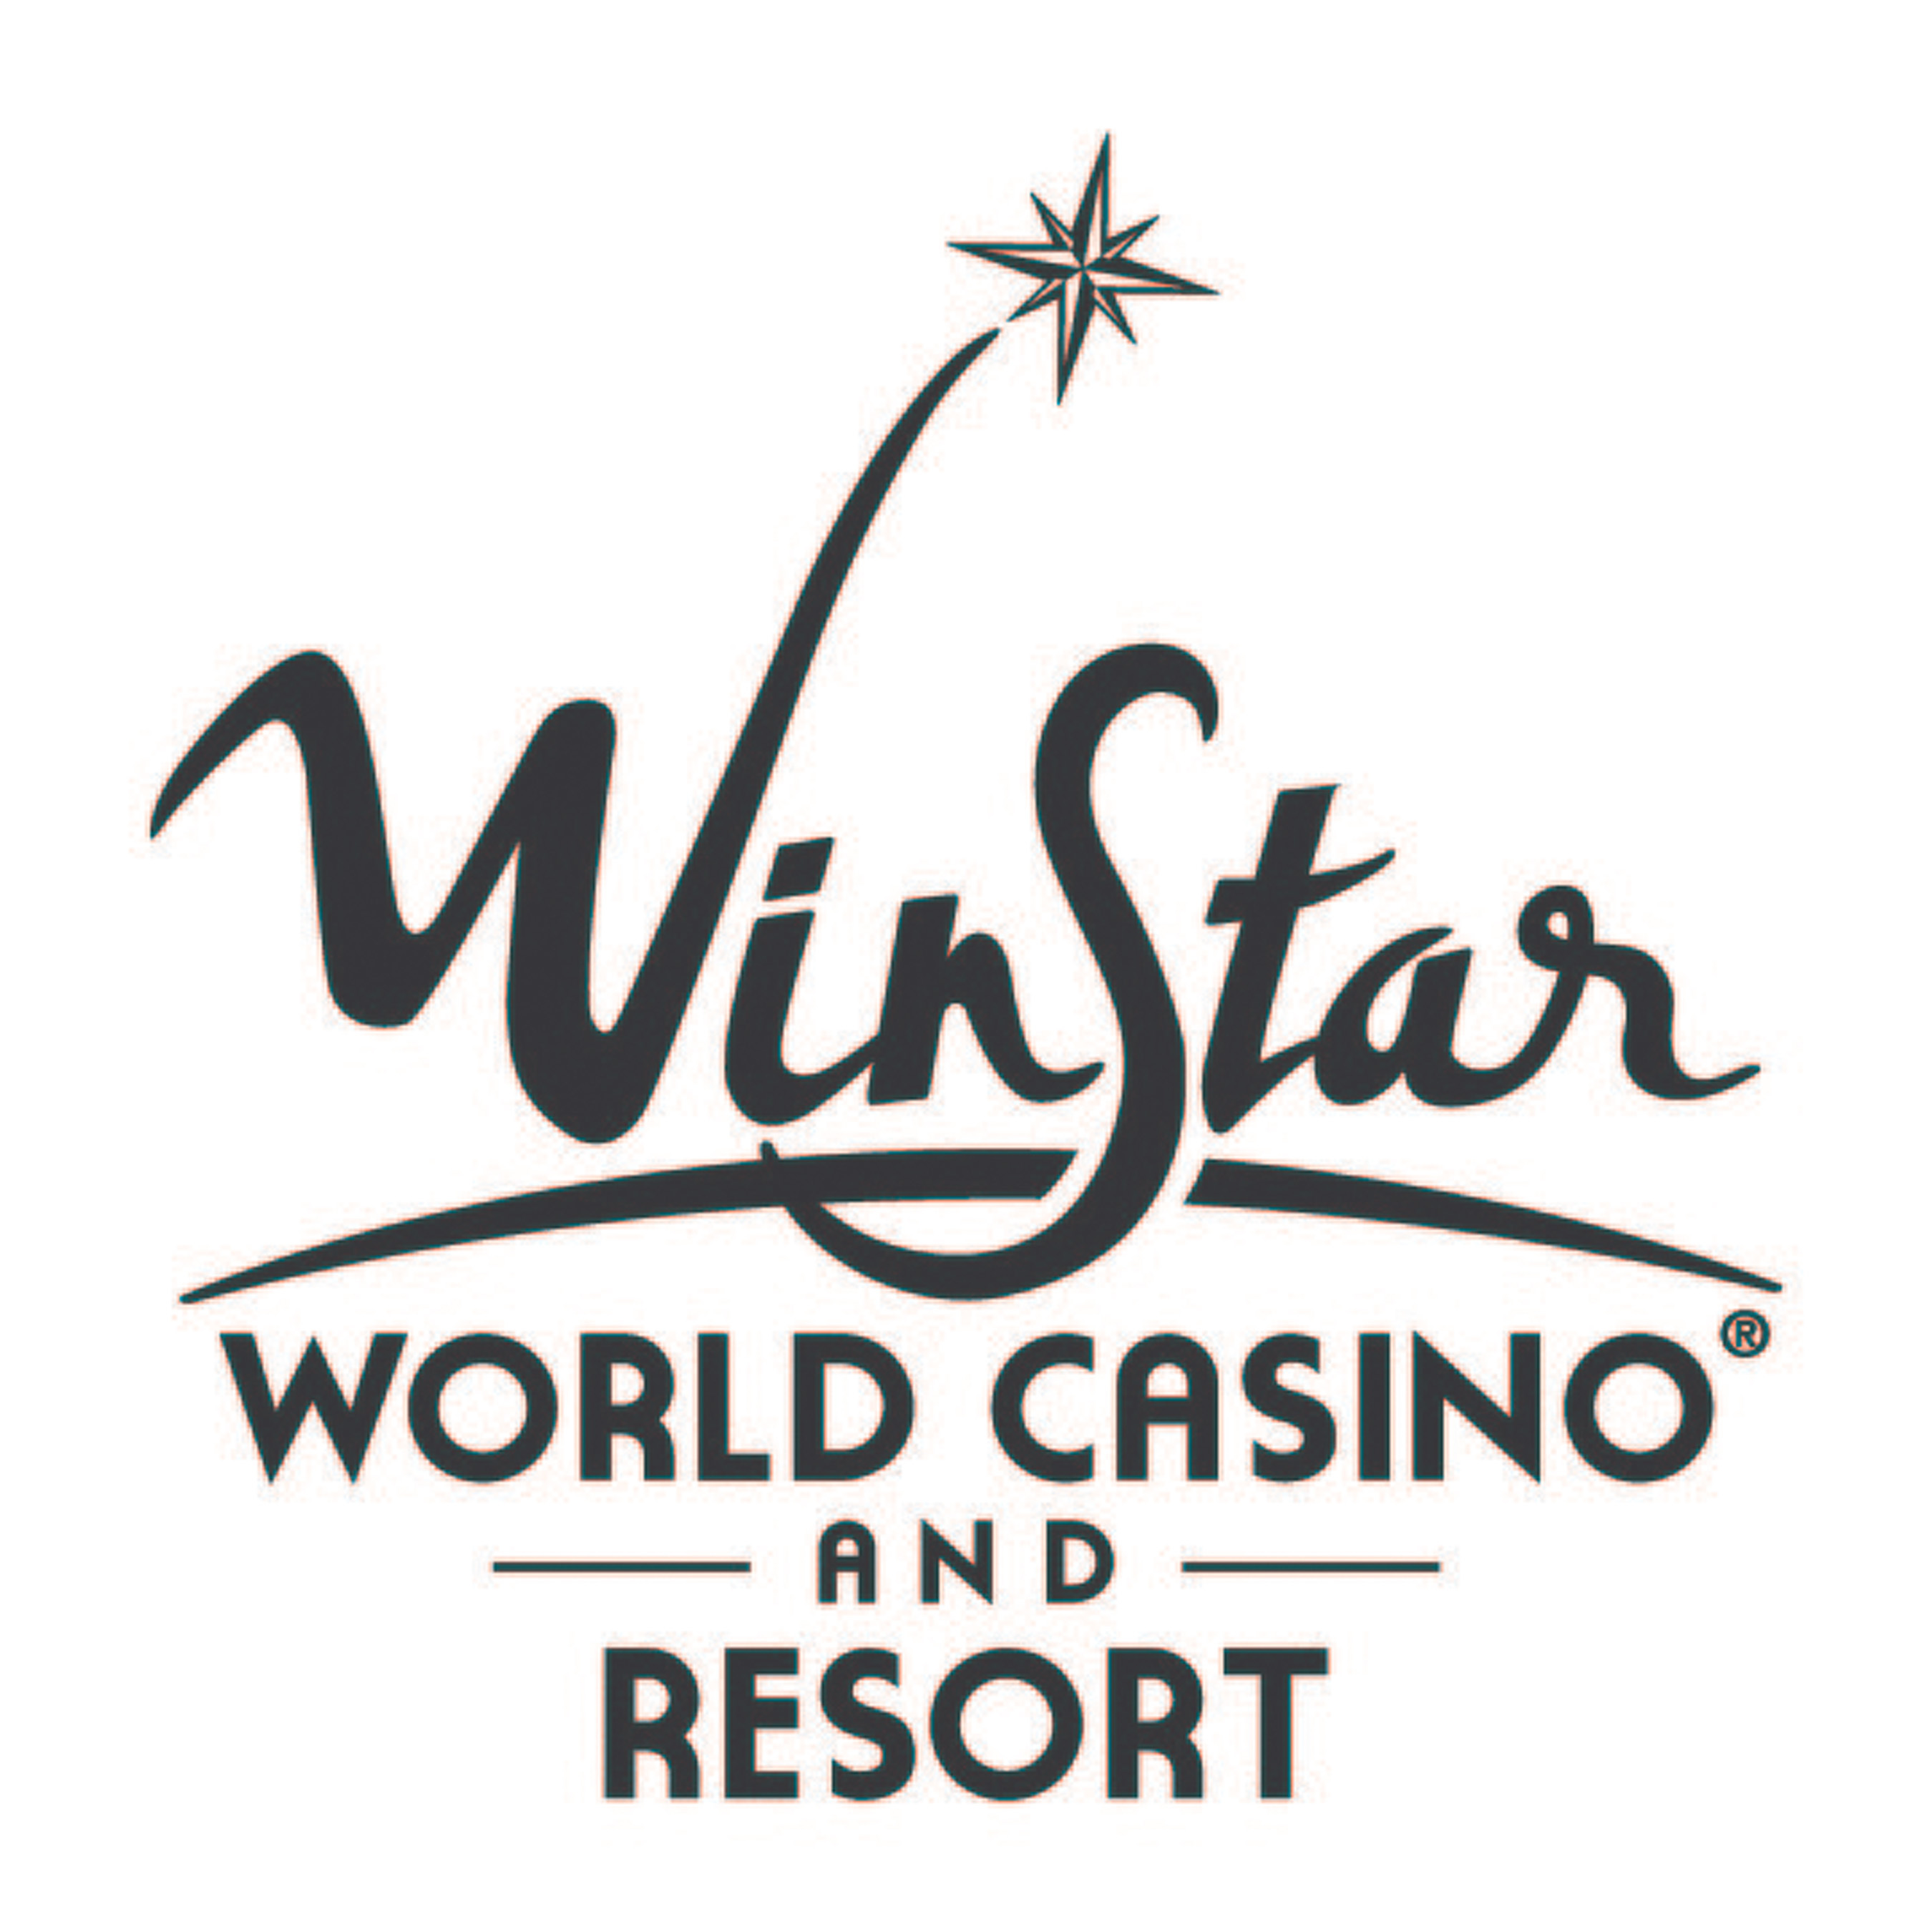 Winstar World Casino And Resort Opens Winstar Convention Center